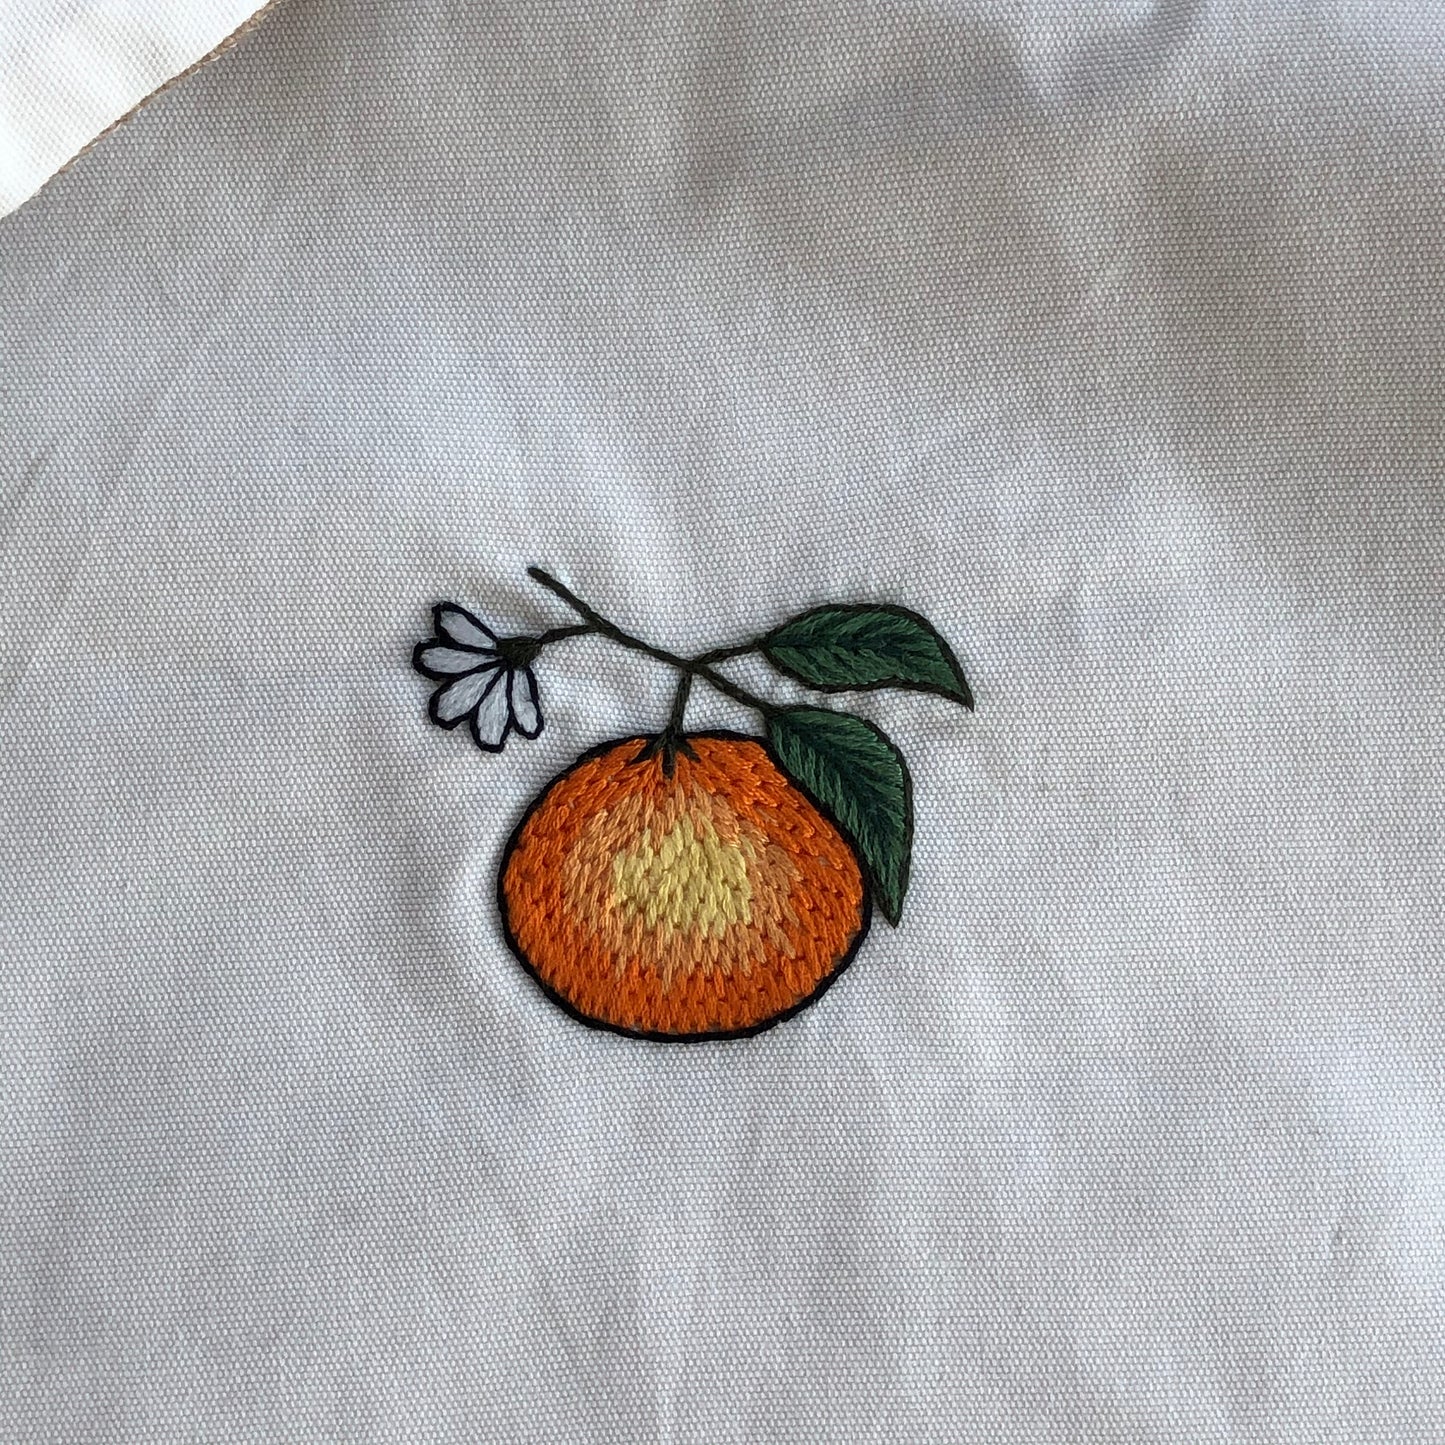 Handmade Linen Embroidery Orange  Tote Bag